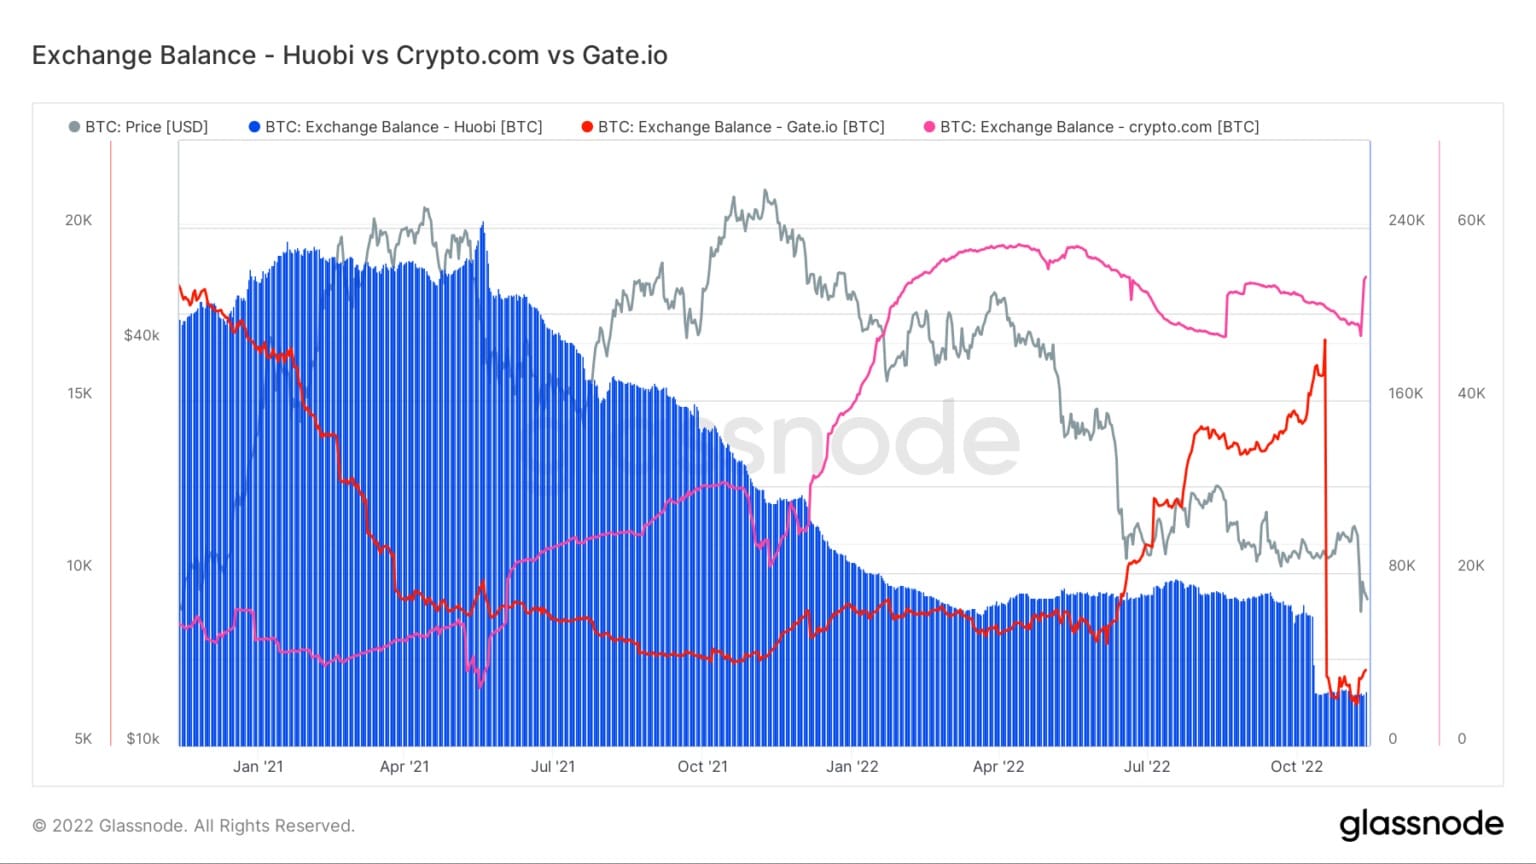 Grafiek met Bitcoin-saldi op Huobi, Crypto.com en Gate.io van januari 2021 tot november 2022 (Bron: Glassnode)